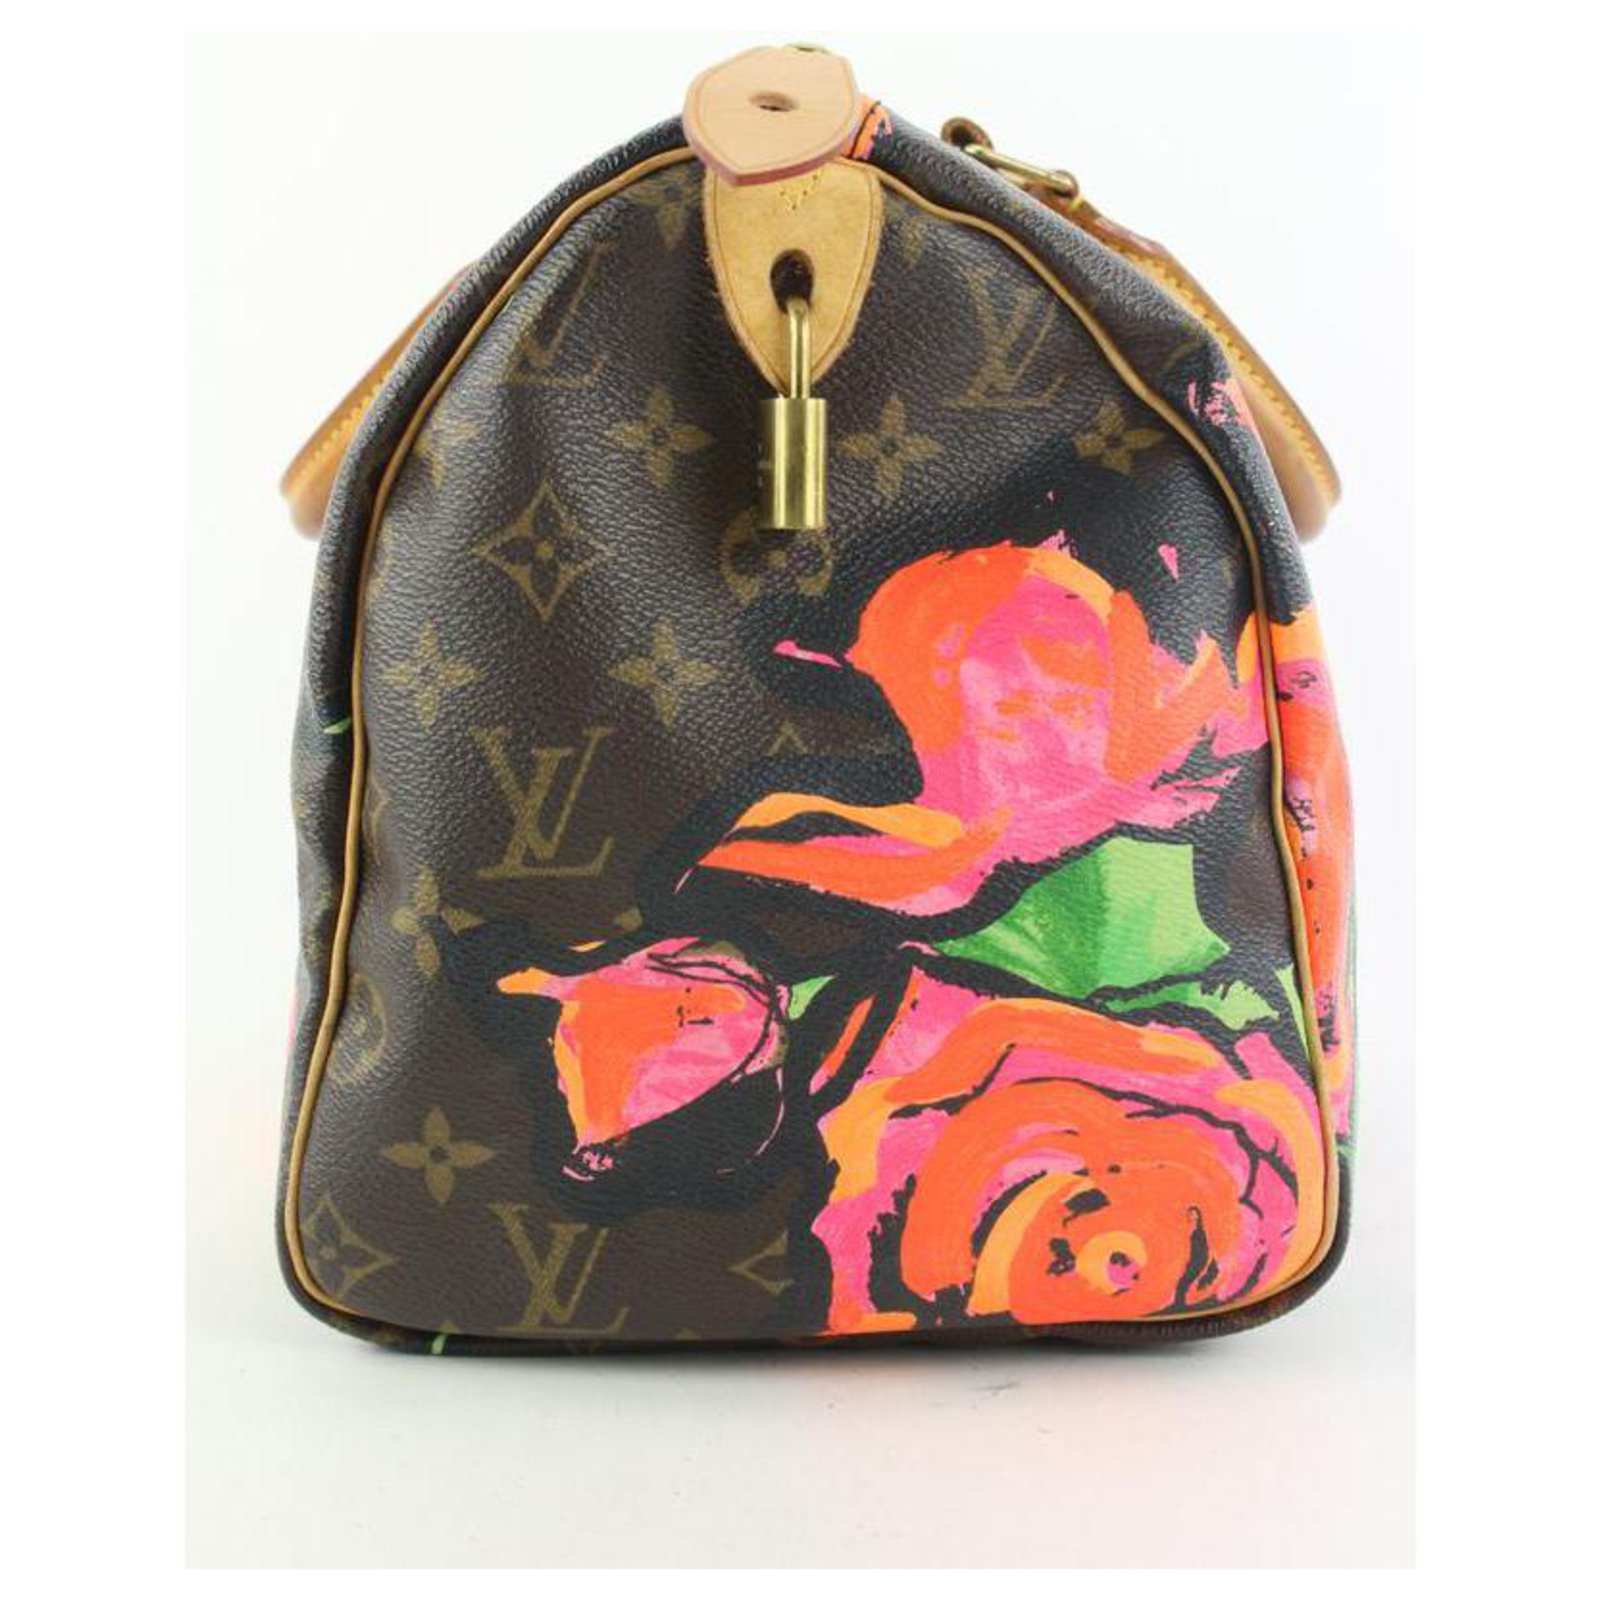 Louis Vuitton Stephen Sprouse Graffiti Roses Speedy 30 Bag Flower